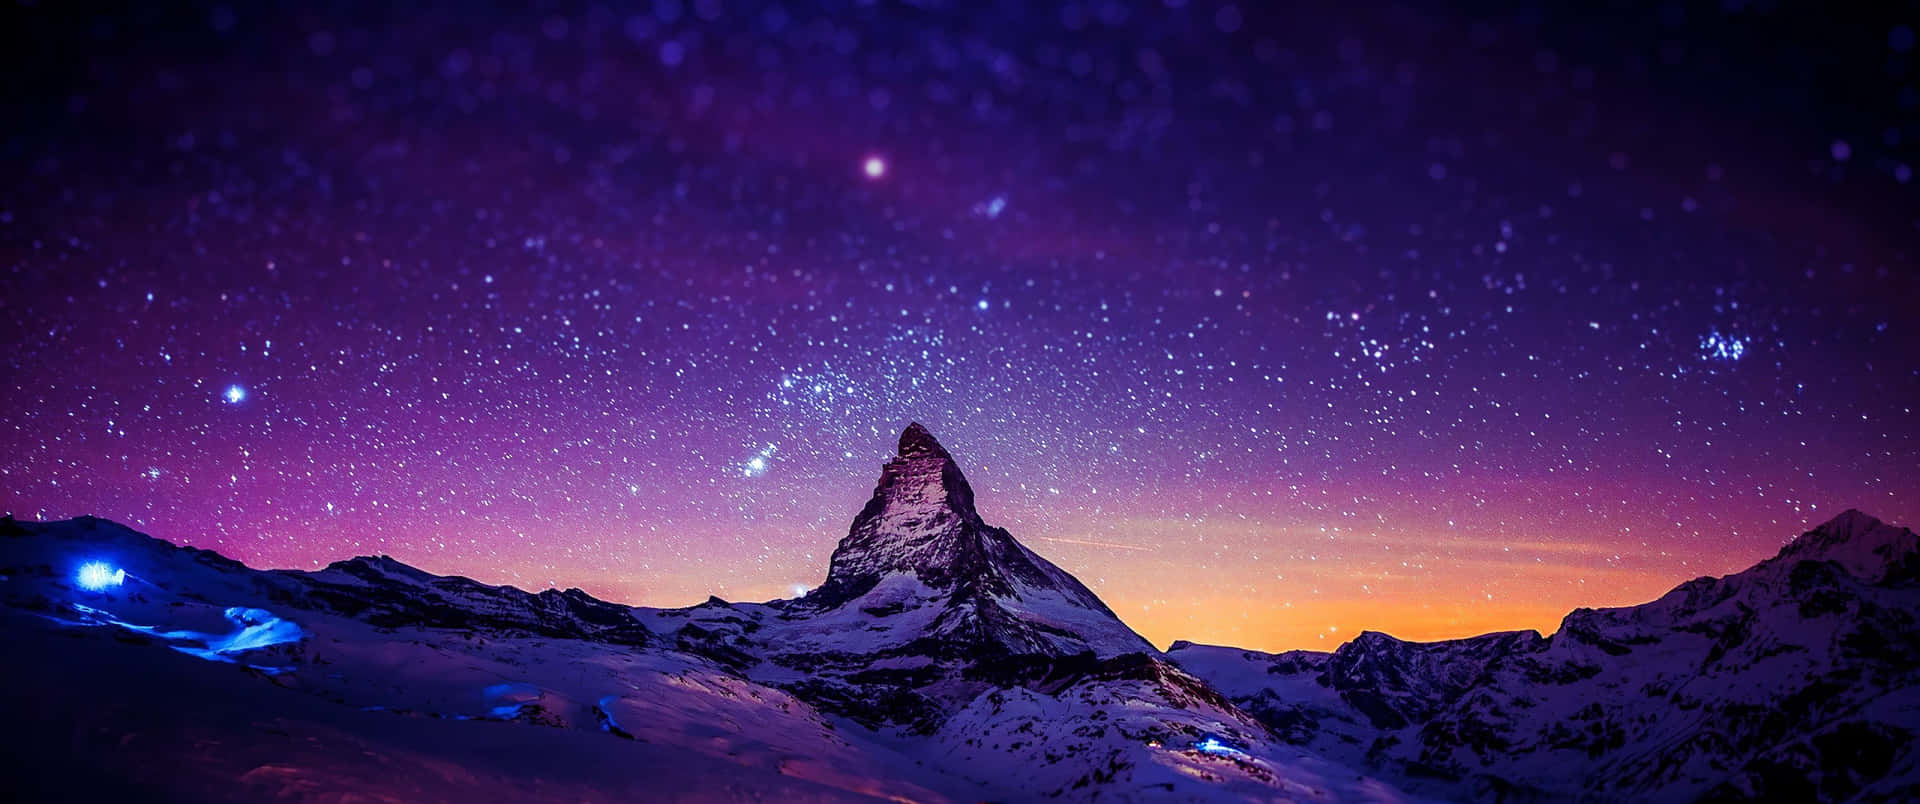 3440x1440p Snefuld Matterhorn bjerg baggrund